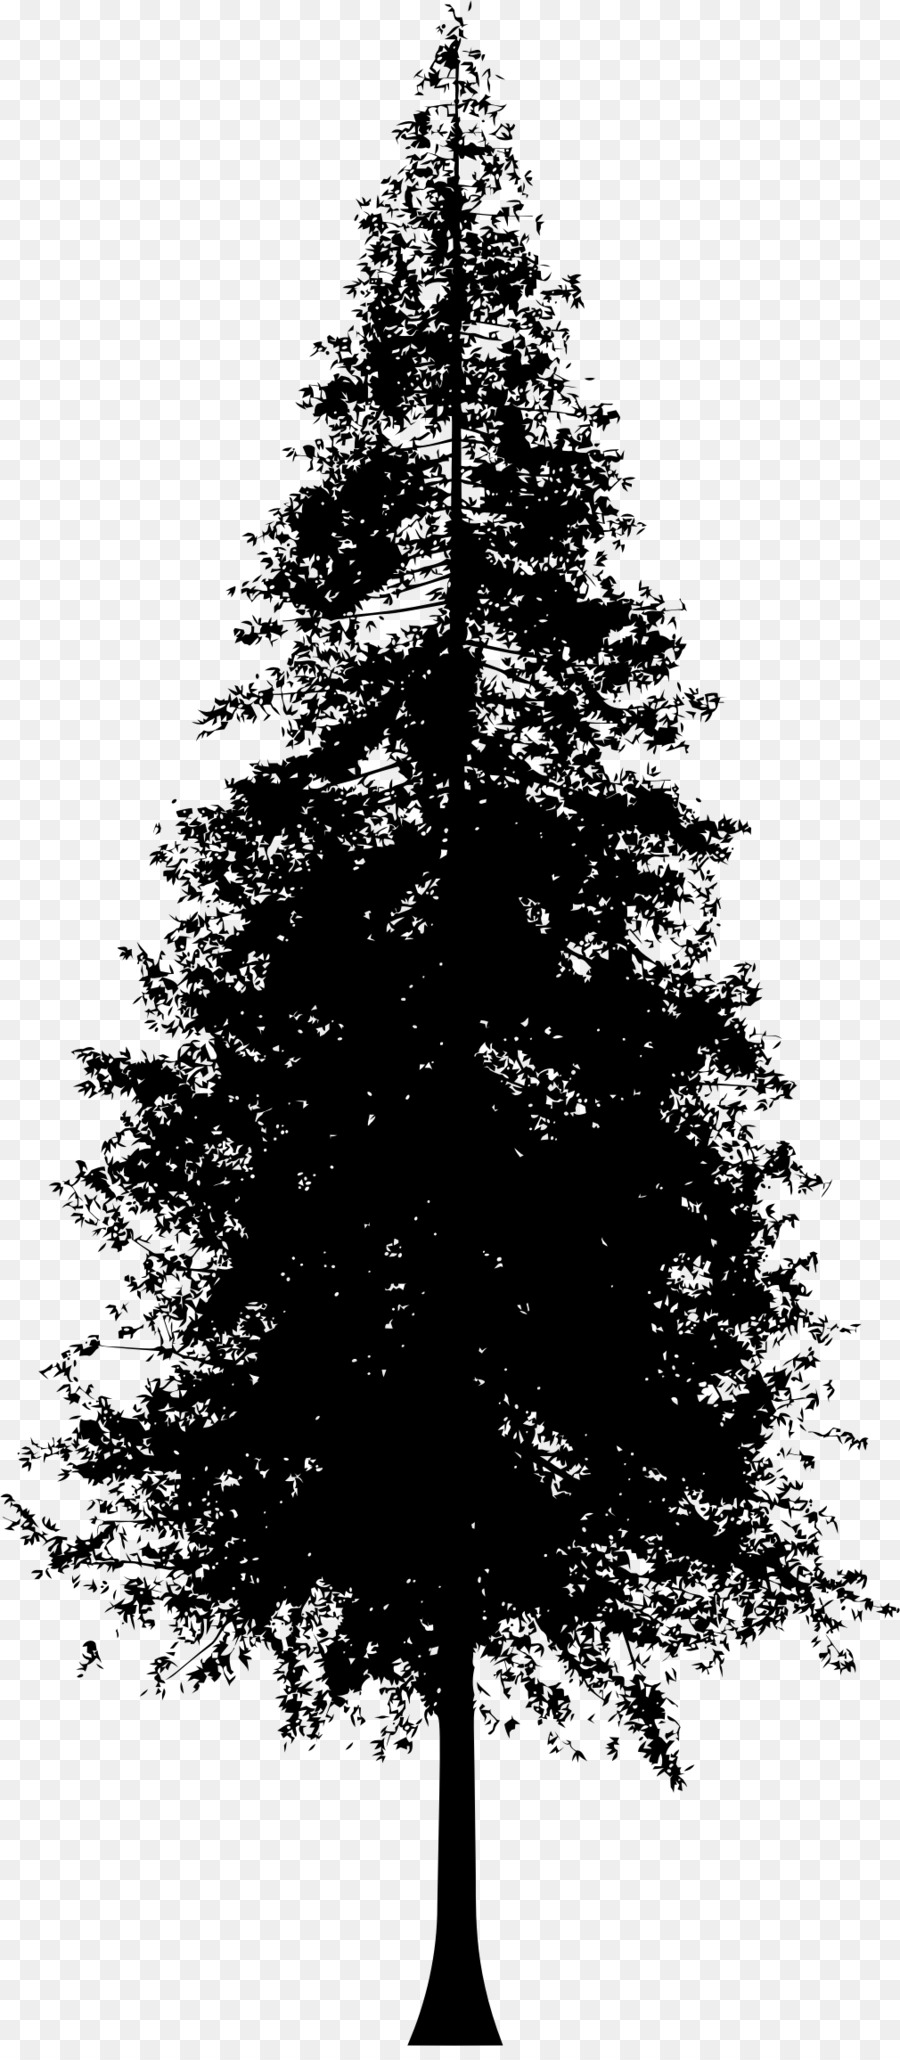 Redwoods Silhouette Coast redwood Clip art - pine tree png download - 1010*2296 - Free Transparent Redwoods png Download.